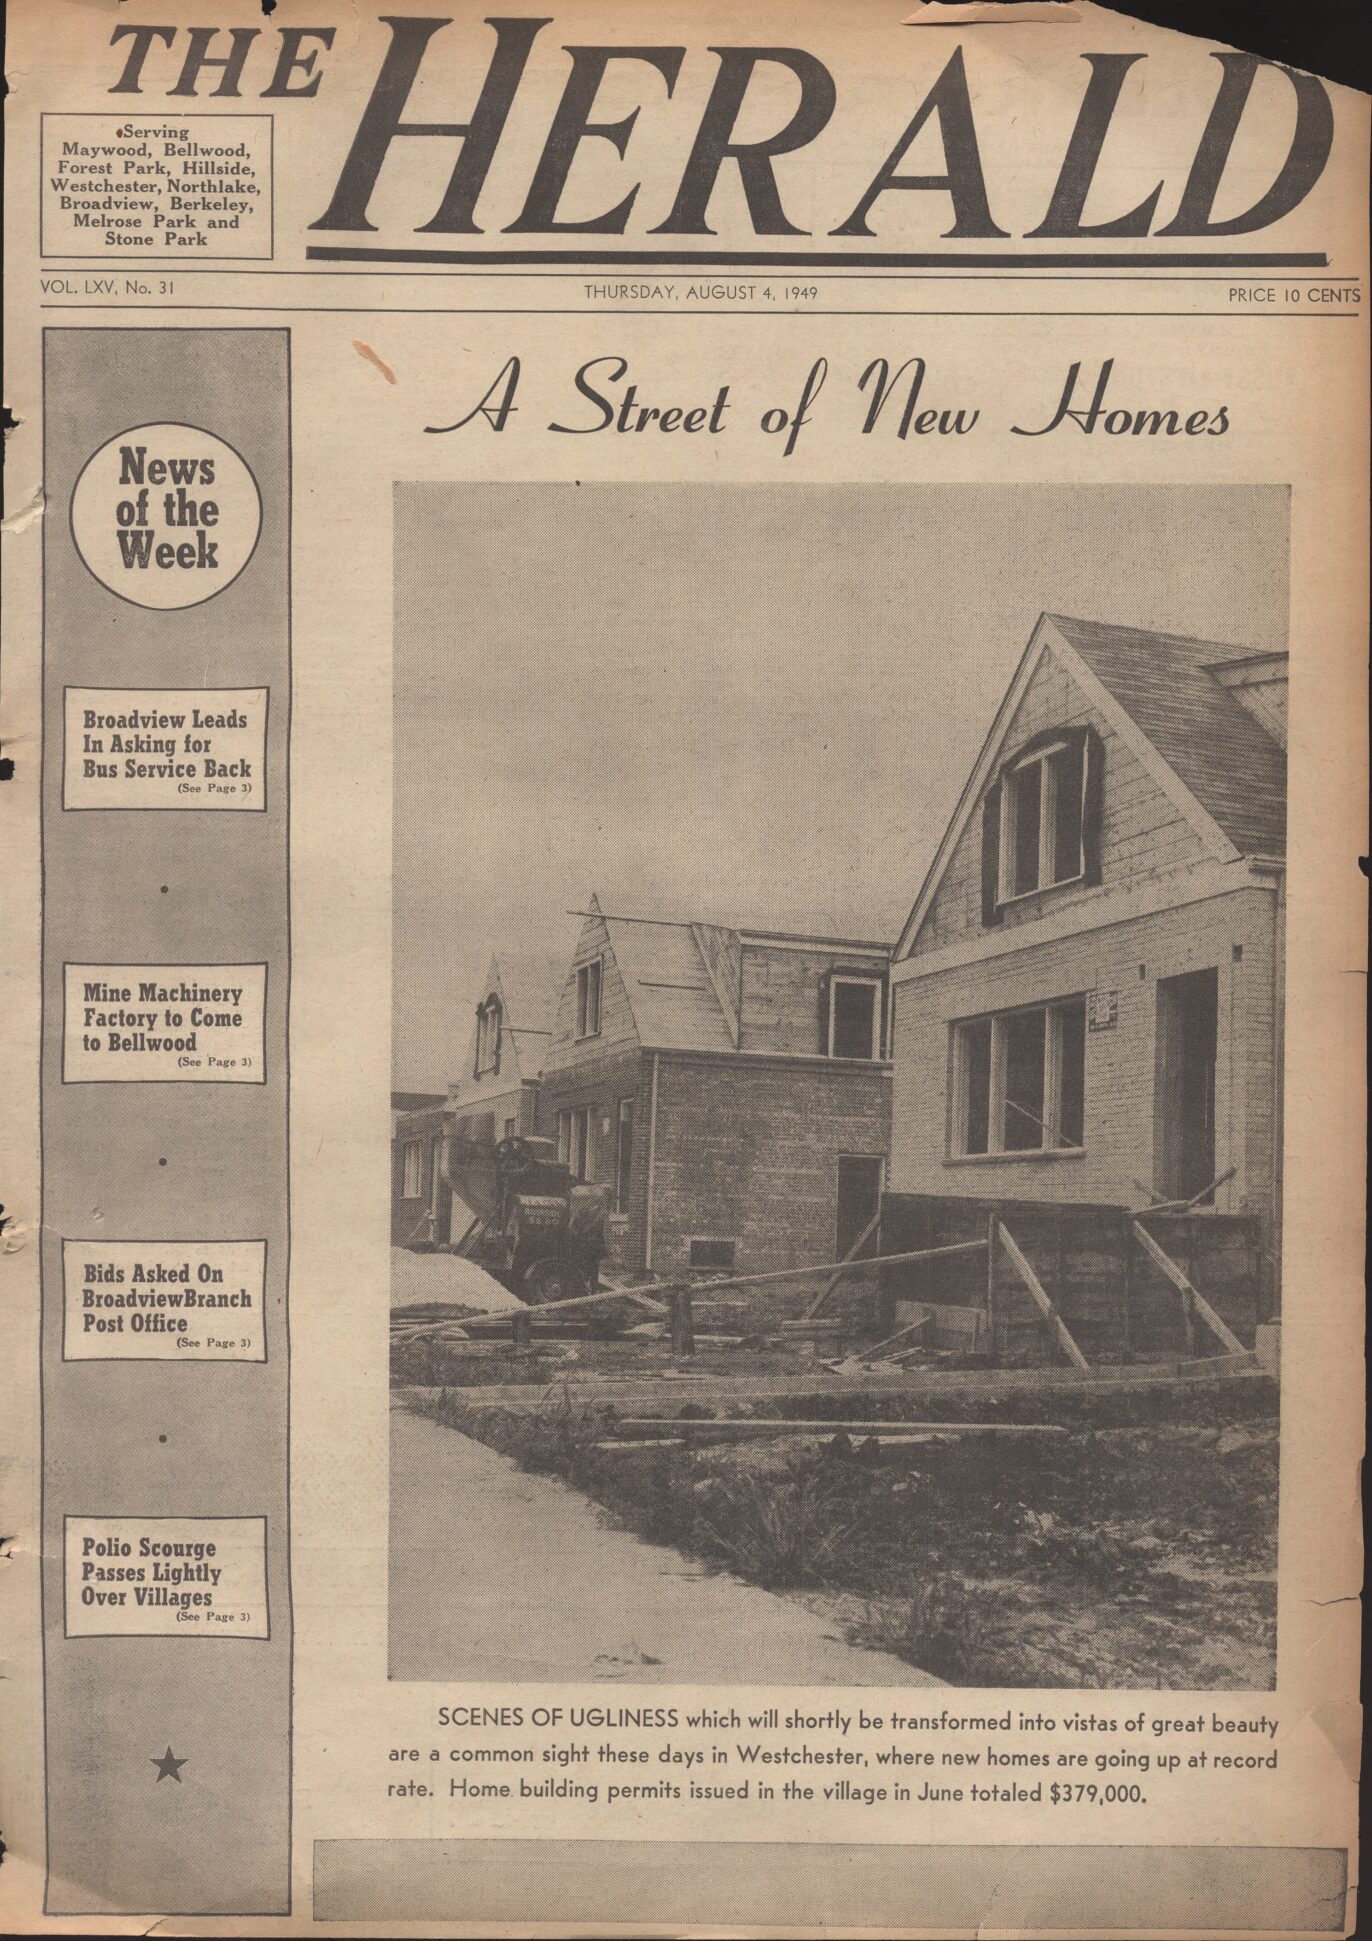 The Herald – 19490804